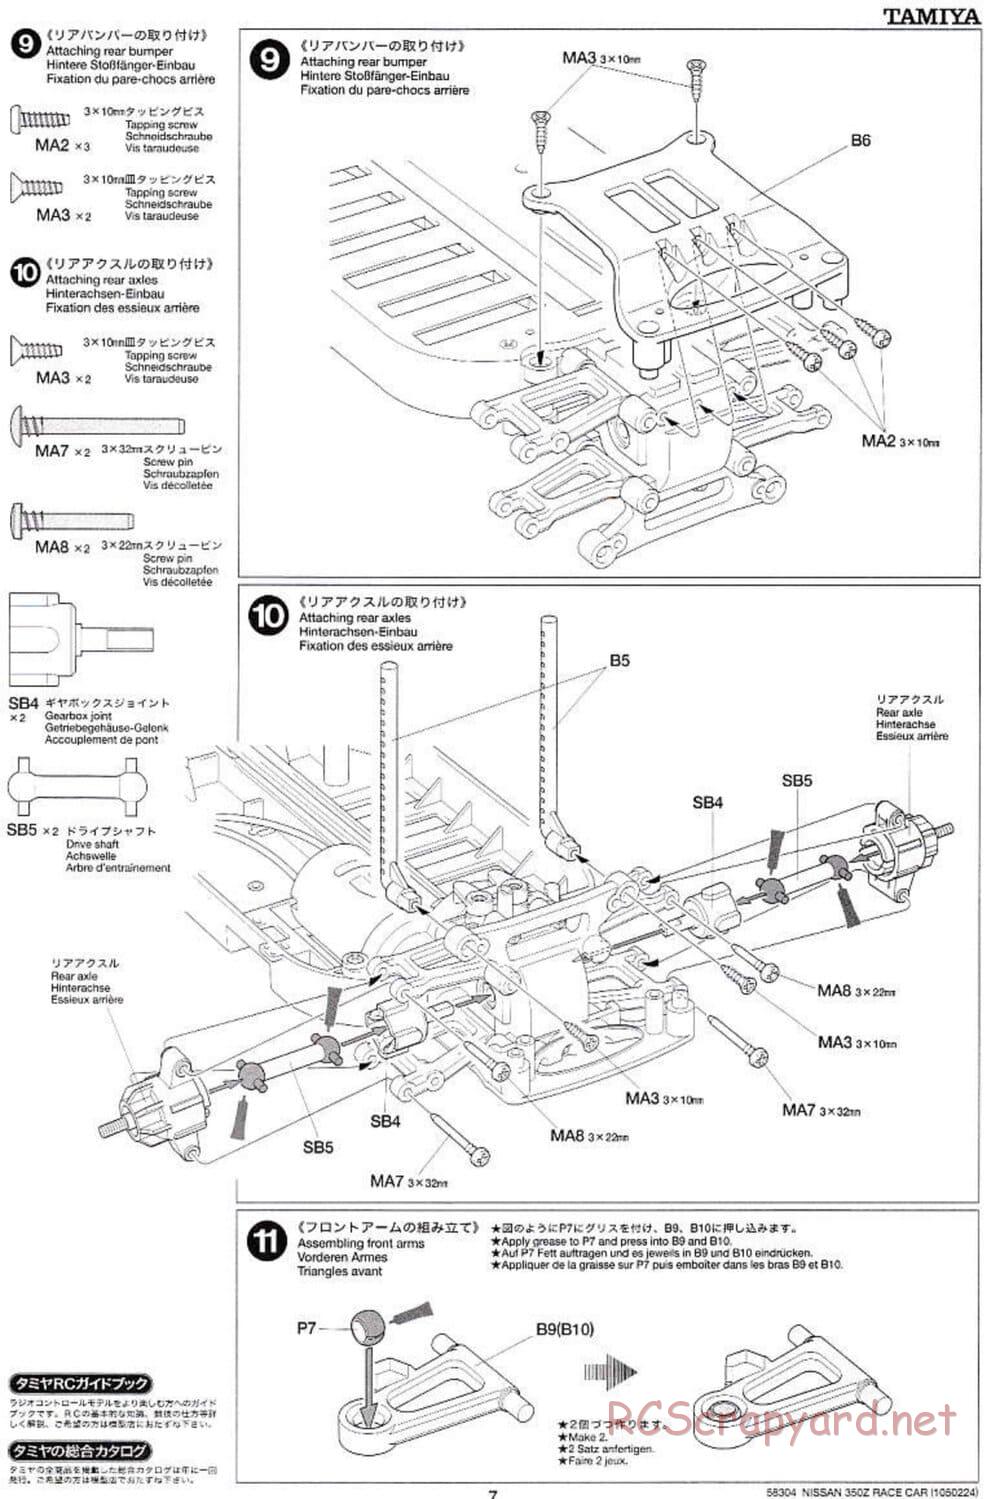 Tamiya - Nissan 350Z Race-Car - TT-01 Chassis - Manual - Page 7